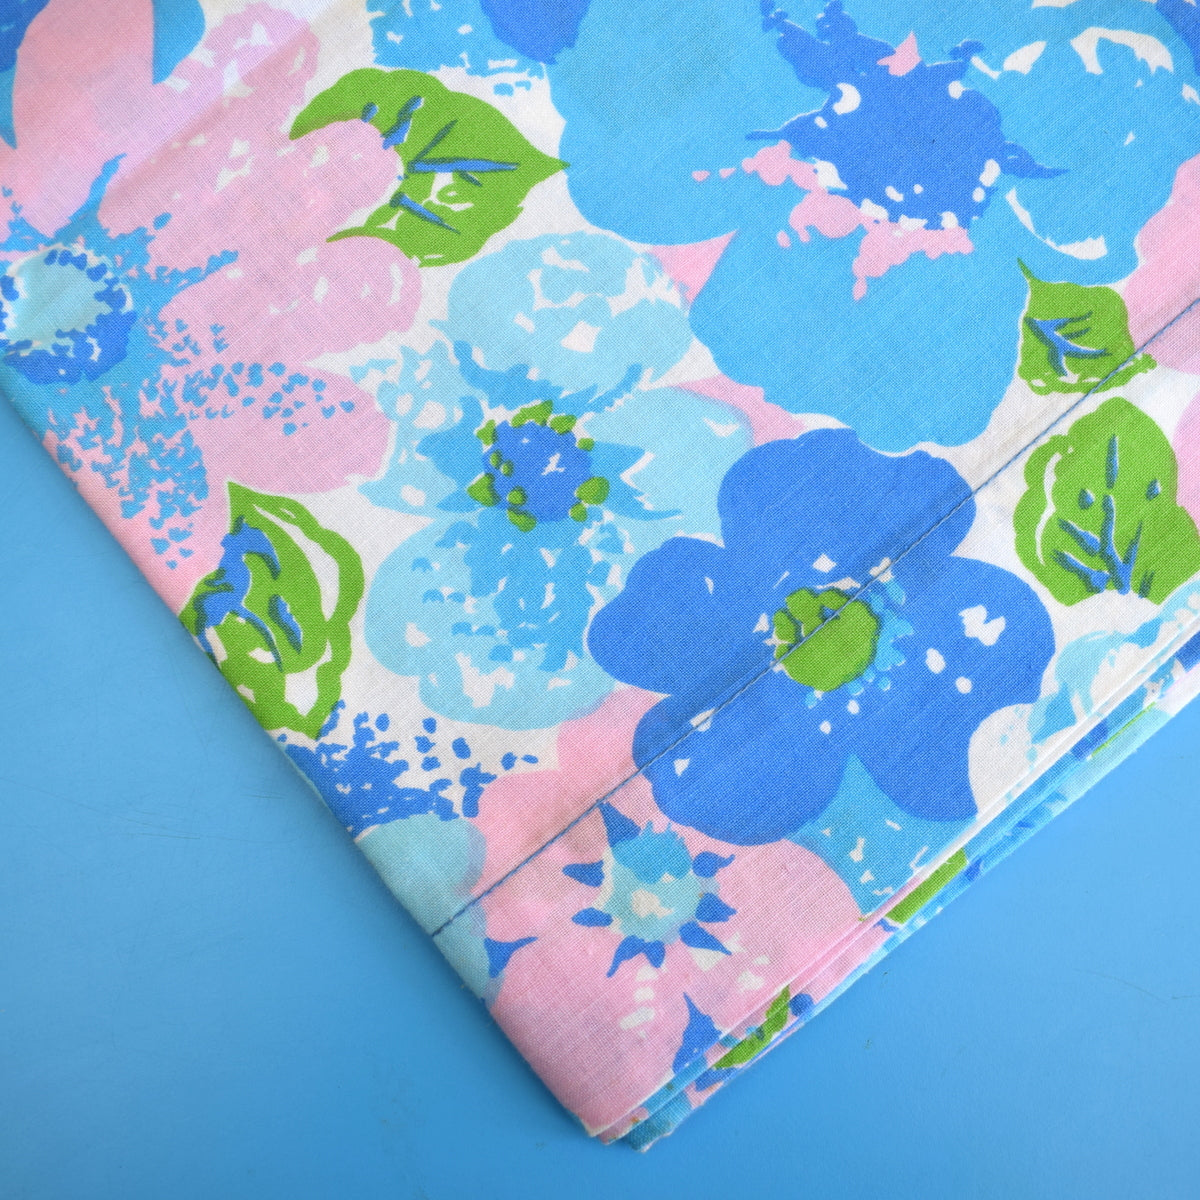 Vintage 1960s Twin Sheet & Pillowcases - Flower Power - Blue